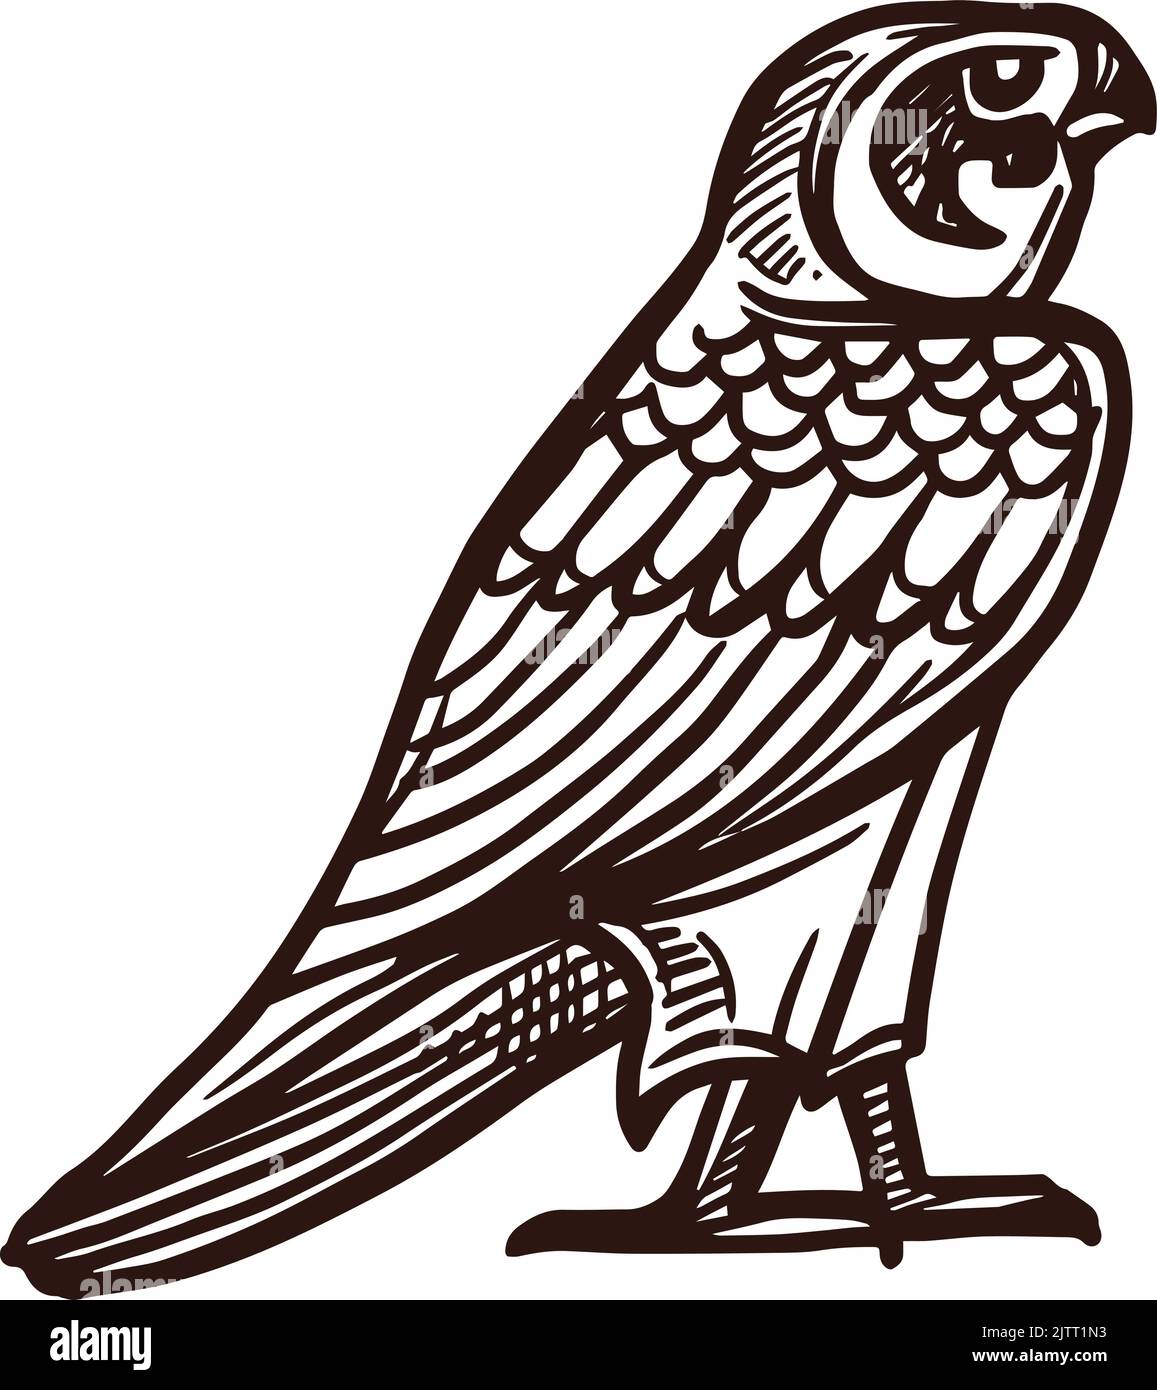 Horus falcon sketch, Ancient Egypt deity and mythology bird, vector icon. Ancient Egyptian sacred falcon bird deity and symbol of god Ra or Horus, myt Stock Vector